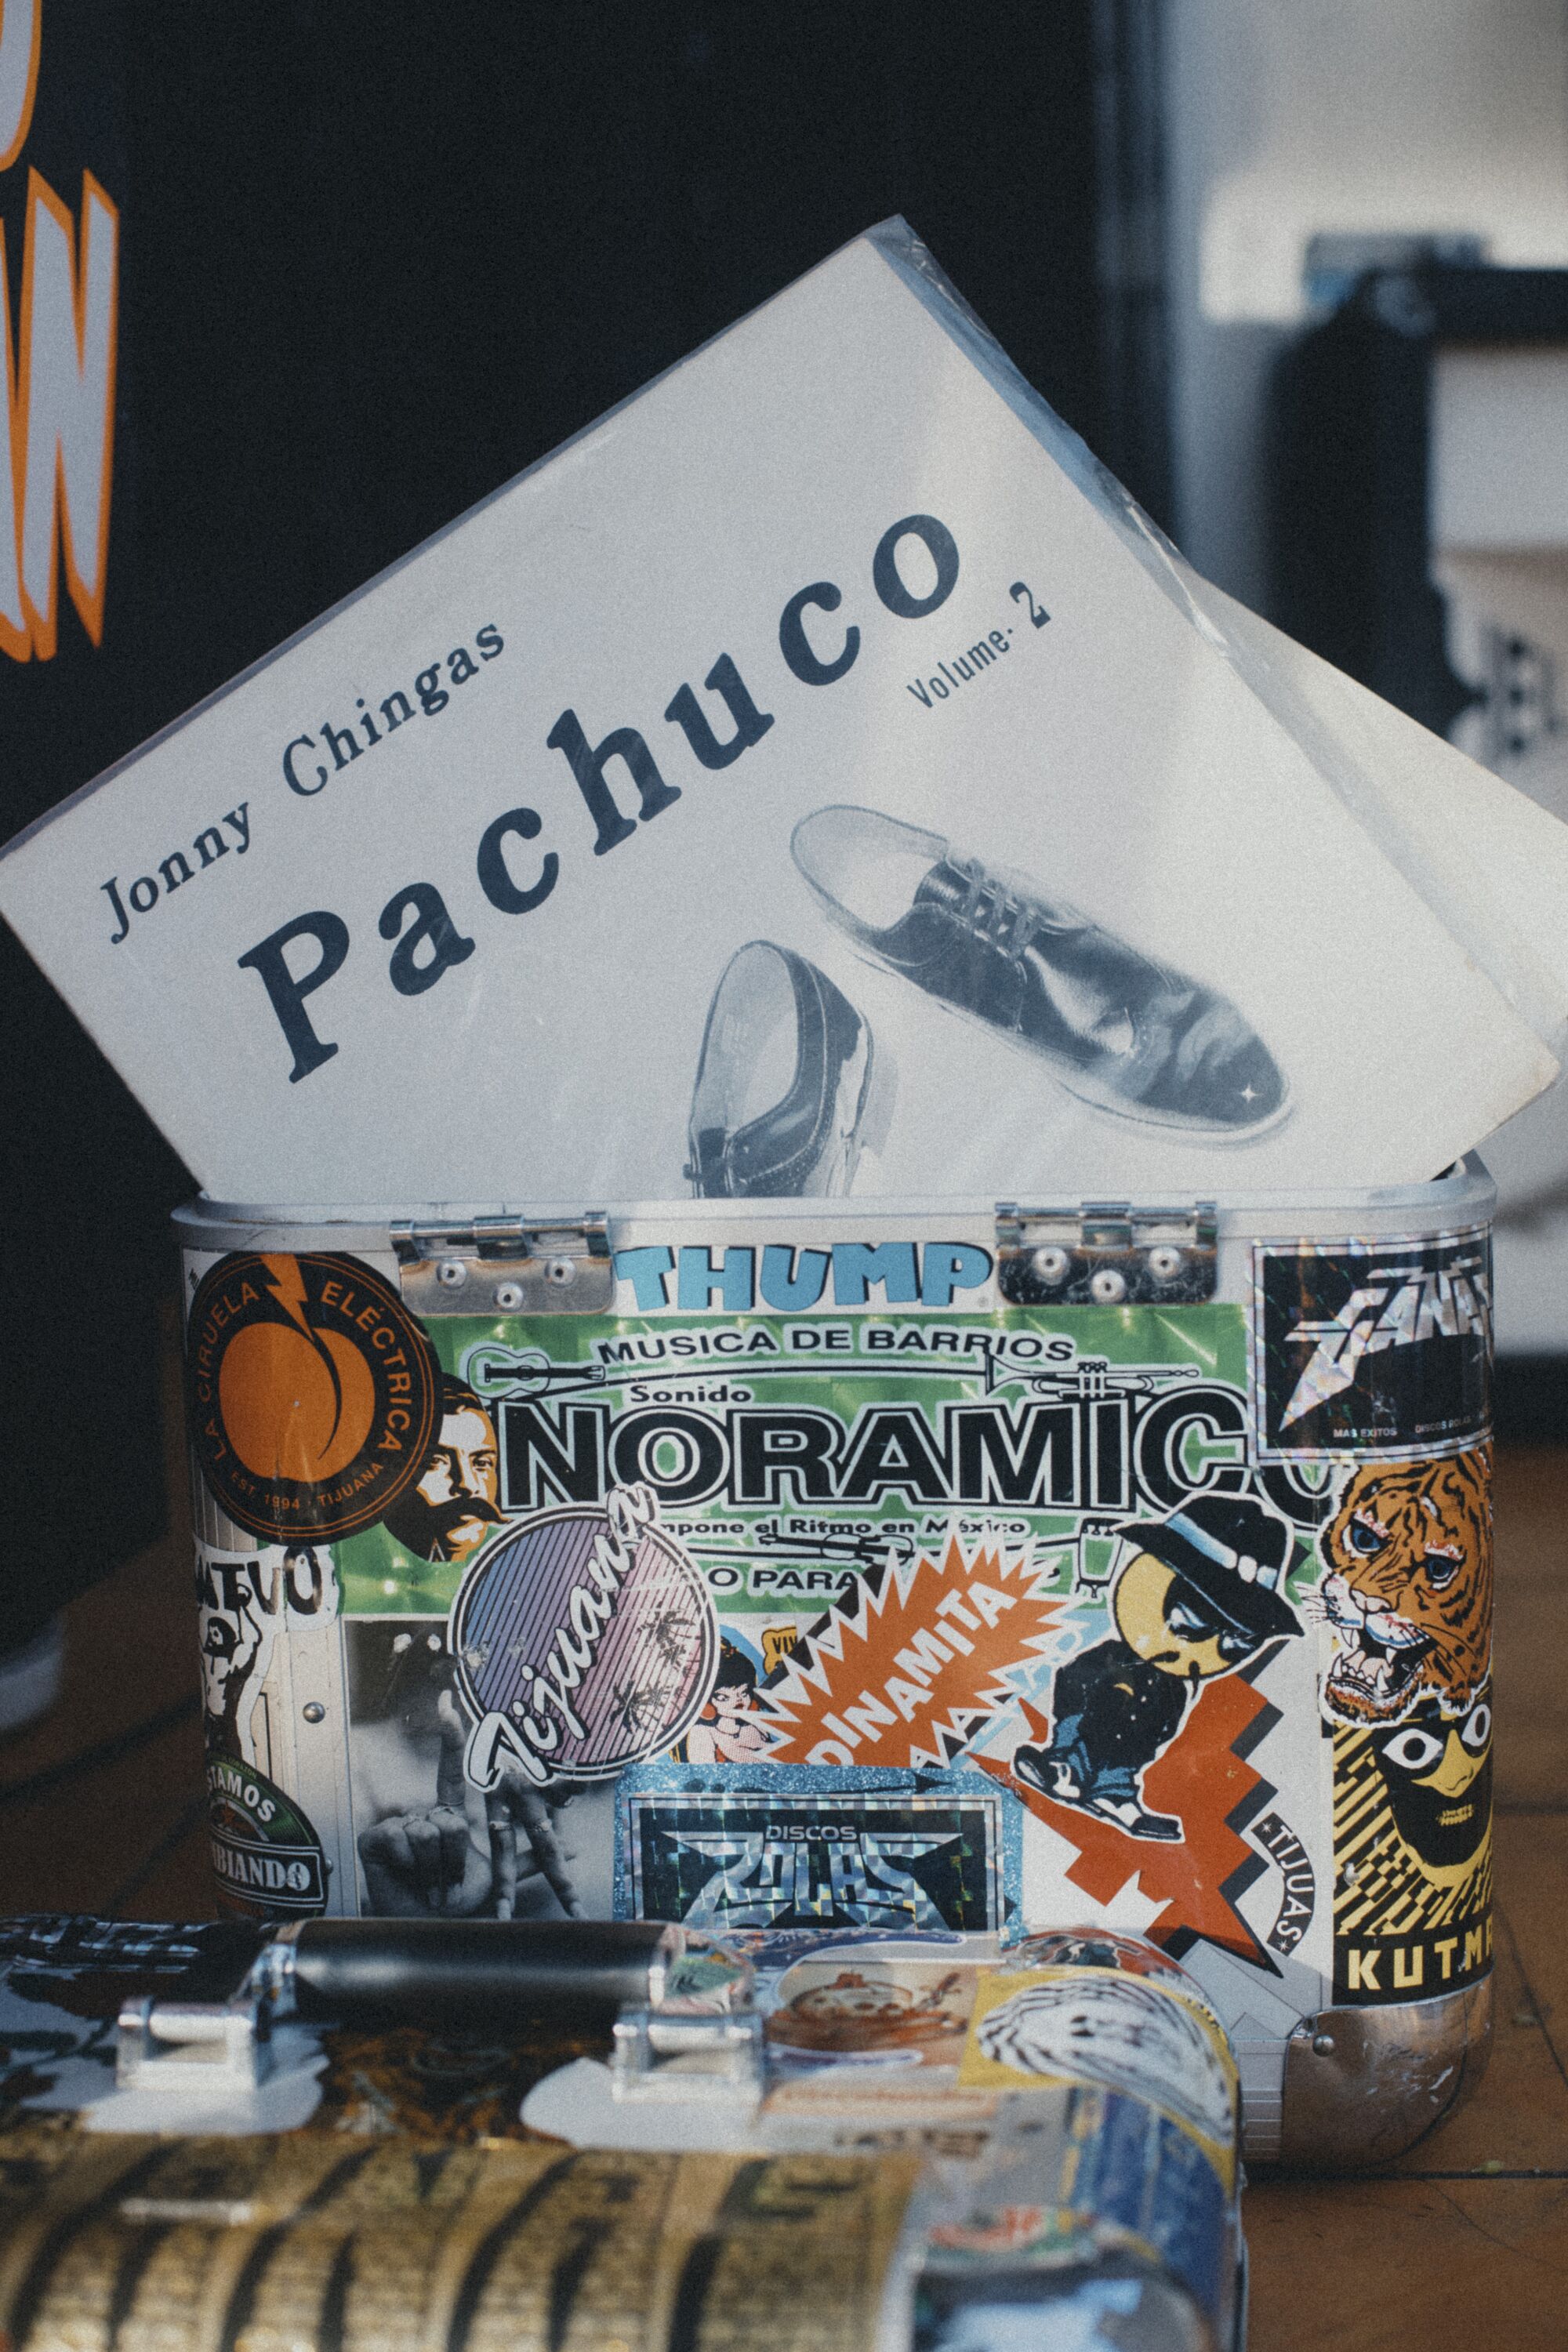 Photograph of"Pachuco Volume 2" — one of Jonny Chingas' classics.